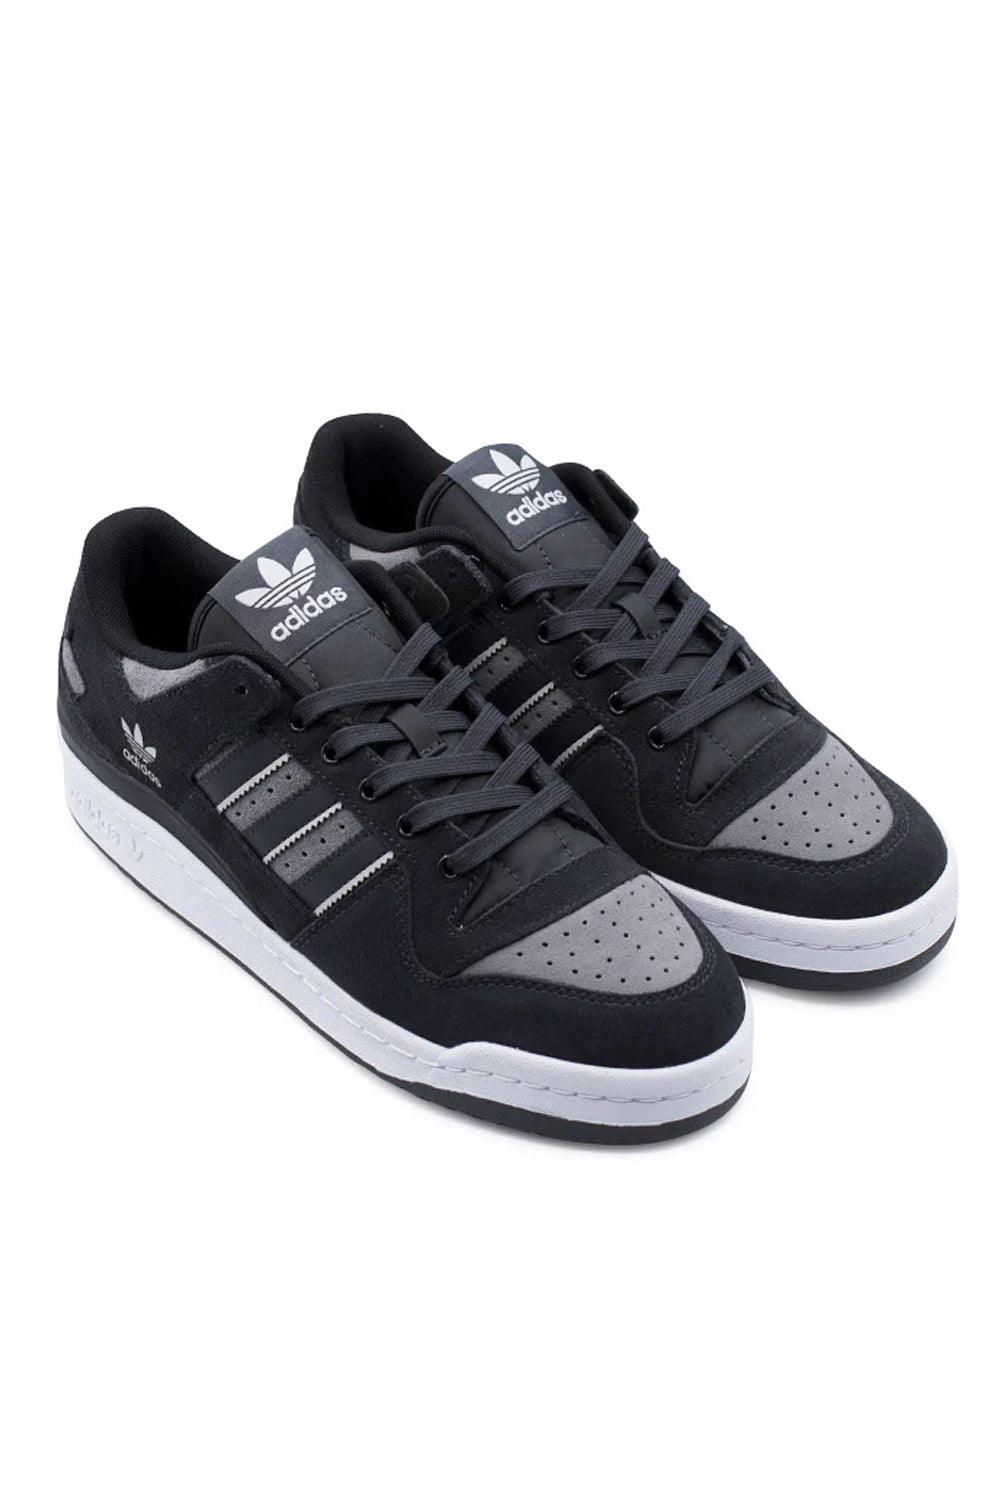 Adidas Forum 84 Low ADV Shoe Carbon / Grey Three / Grey Two / Carbon - BONKERS